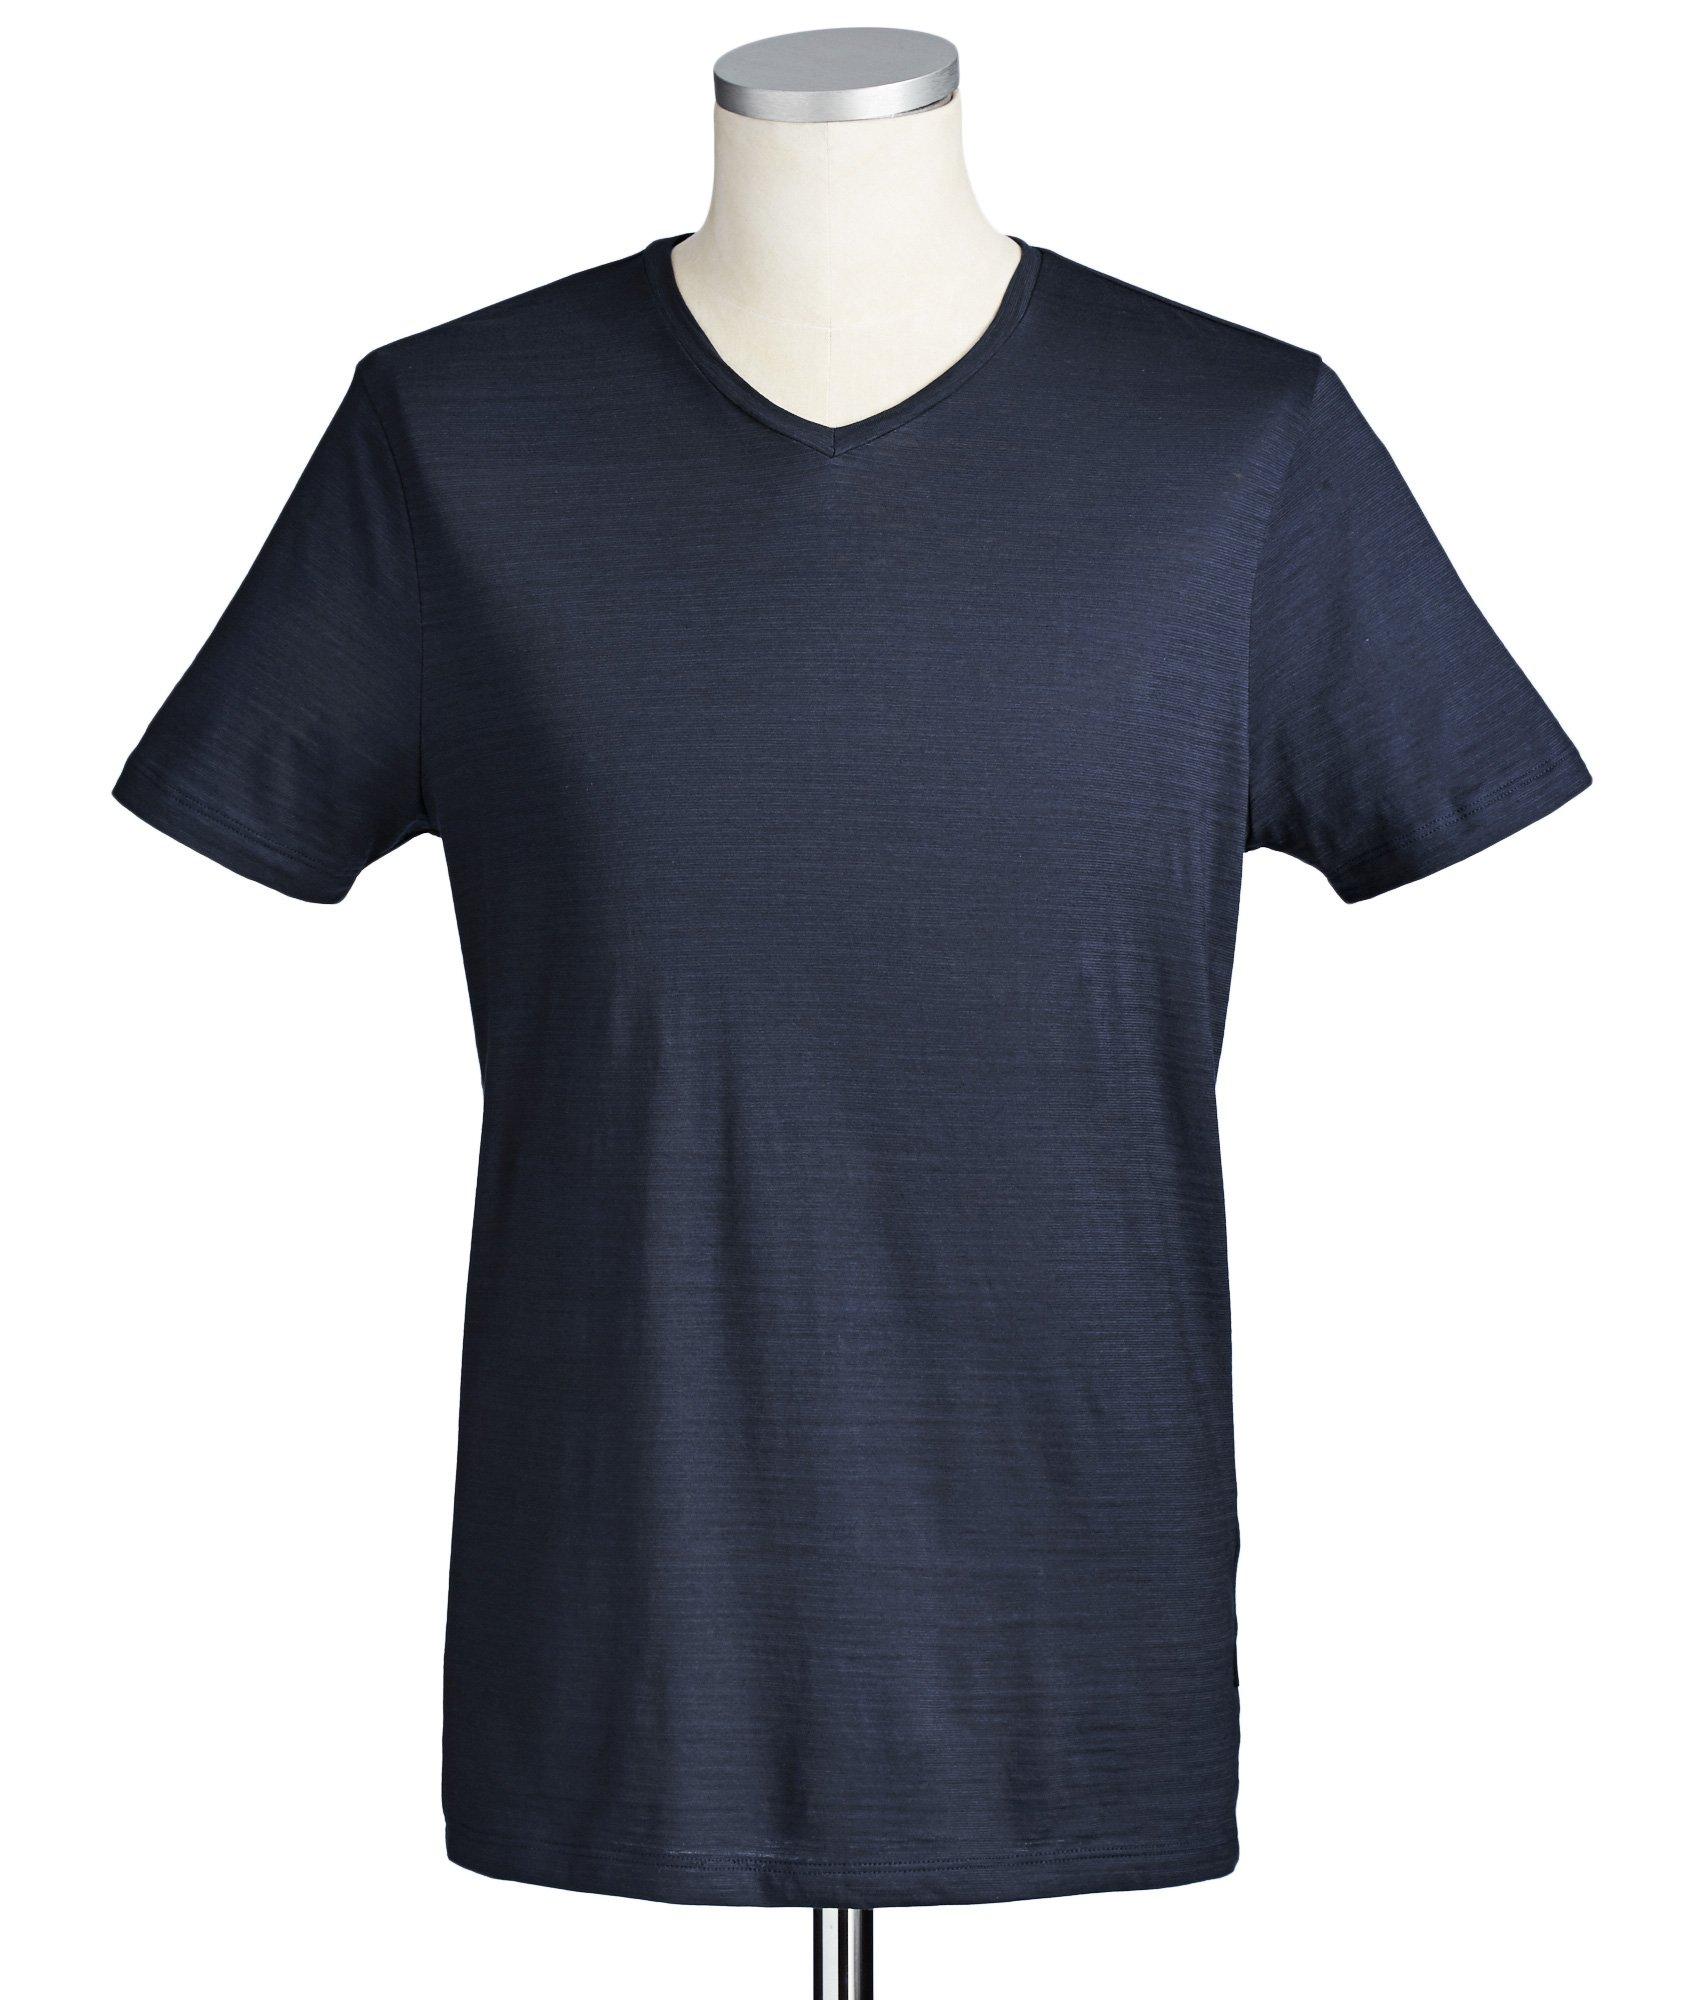 Tilson Cotton T-Shirt image 0